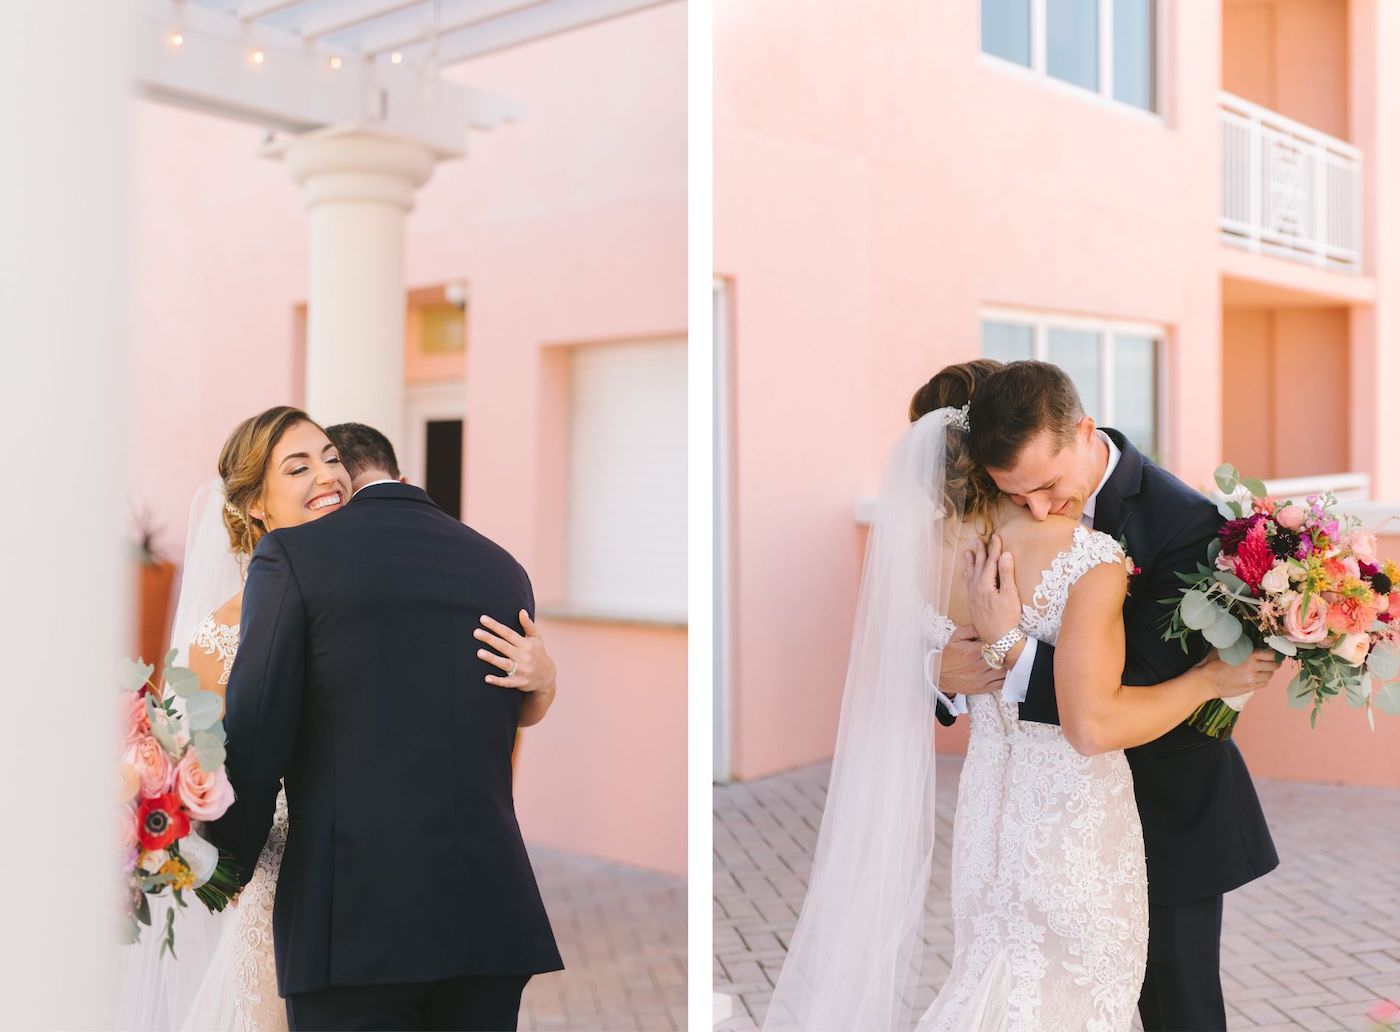 Bride and Groom First Look | Clearwater Wedding Venue The Hyatt Regency Clearwater Beach Rooftop | Tampa Bay Wedding Photographer Kera Photography